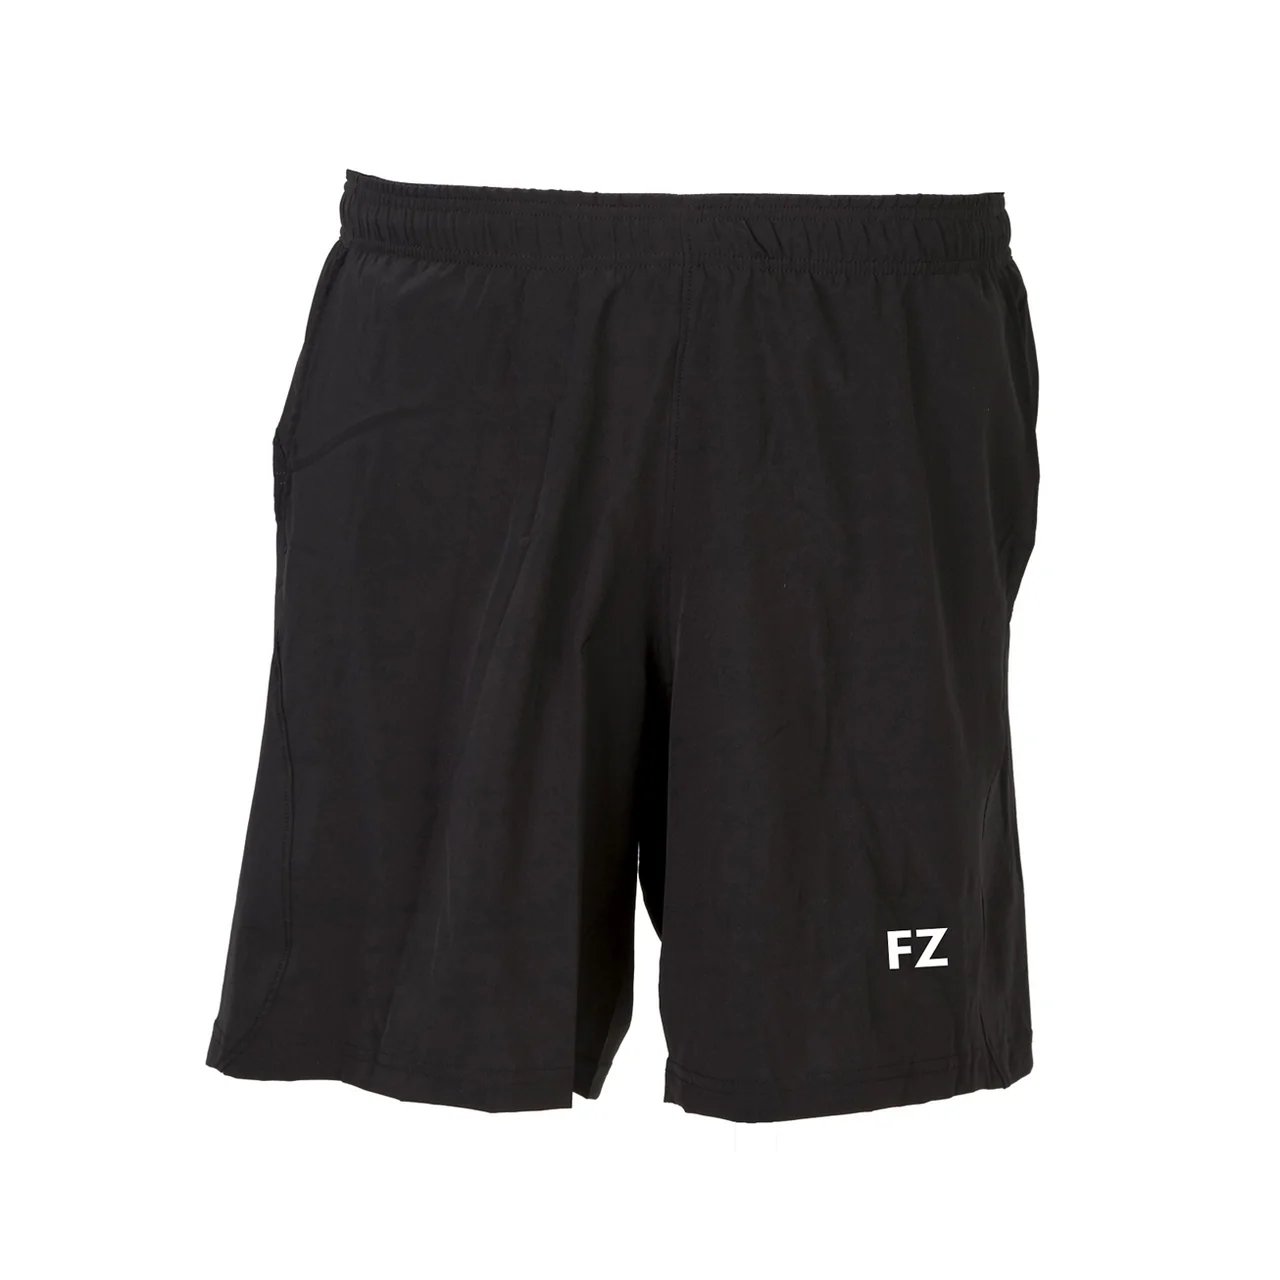 FZ Forza Ajax Shorts Boy Black